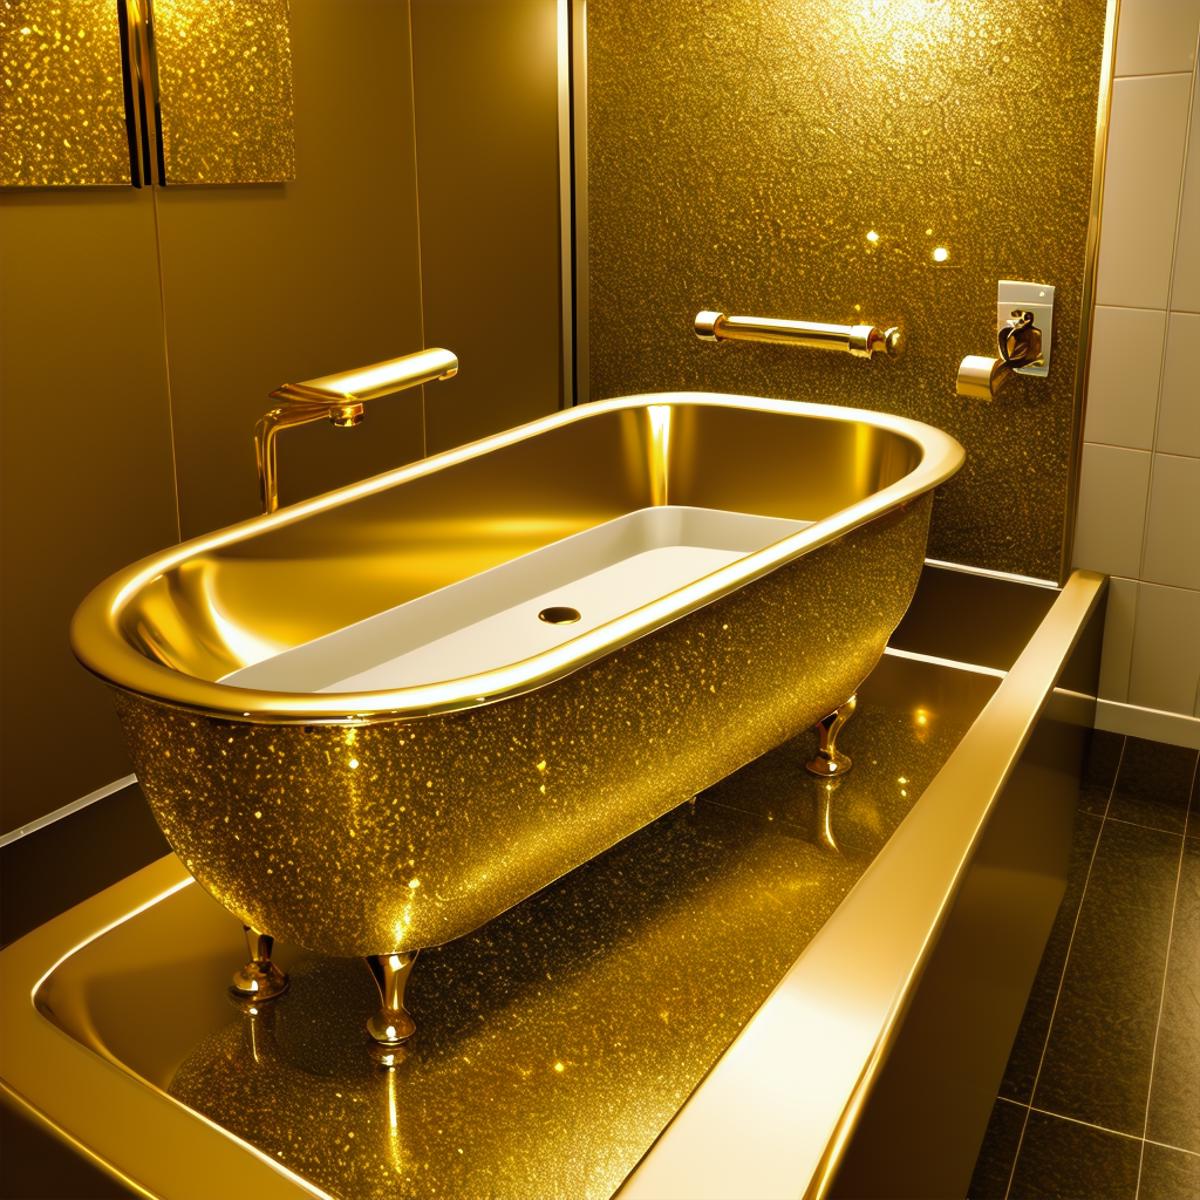 gold bathroom image by KimTarou